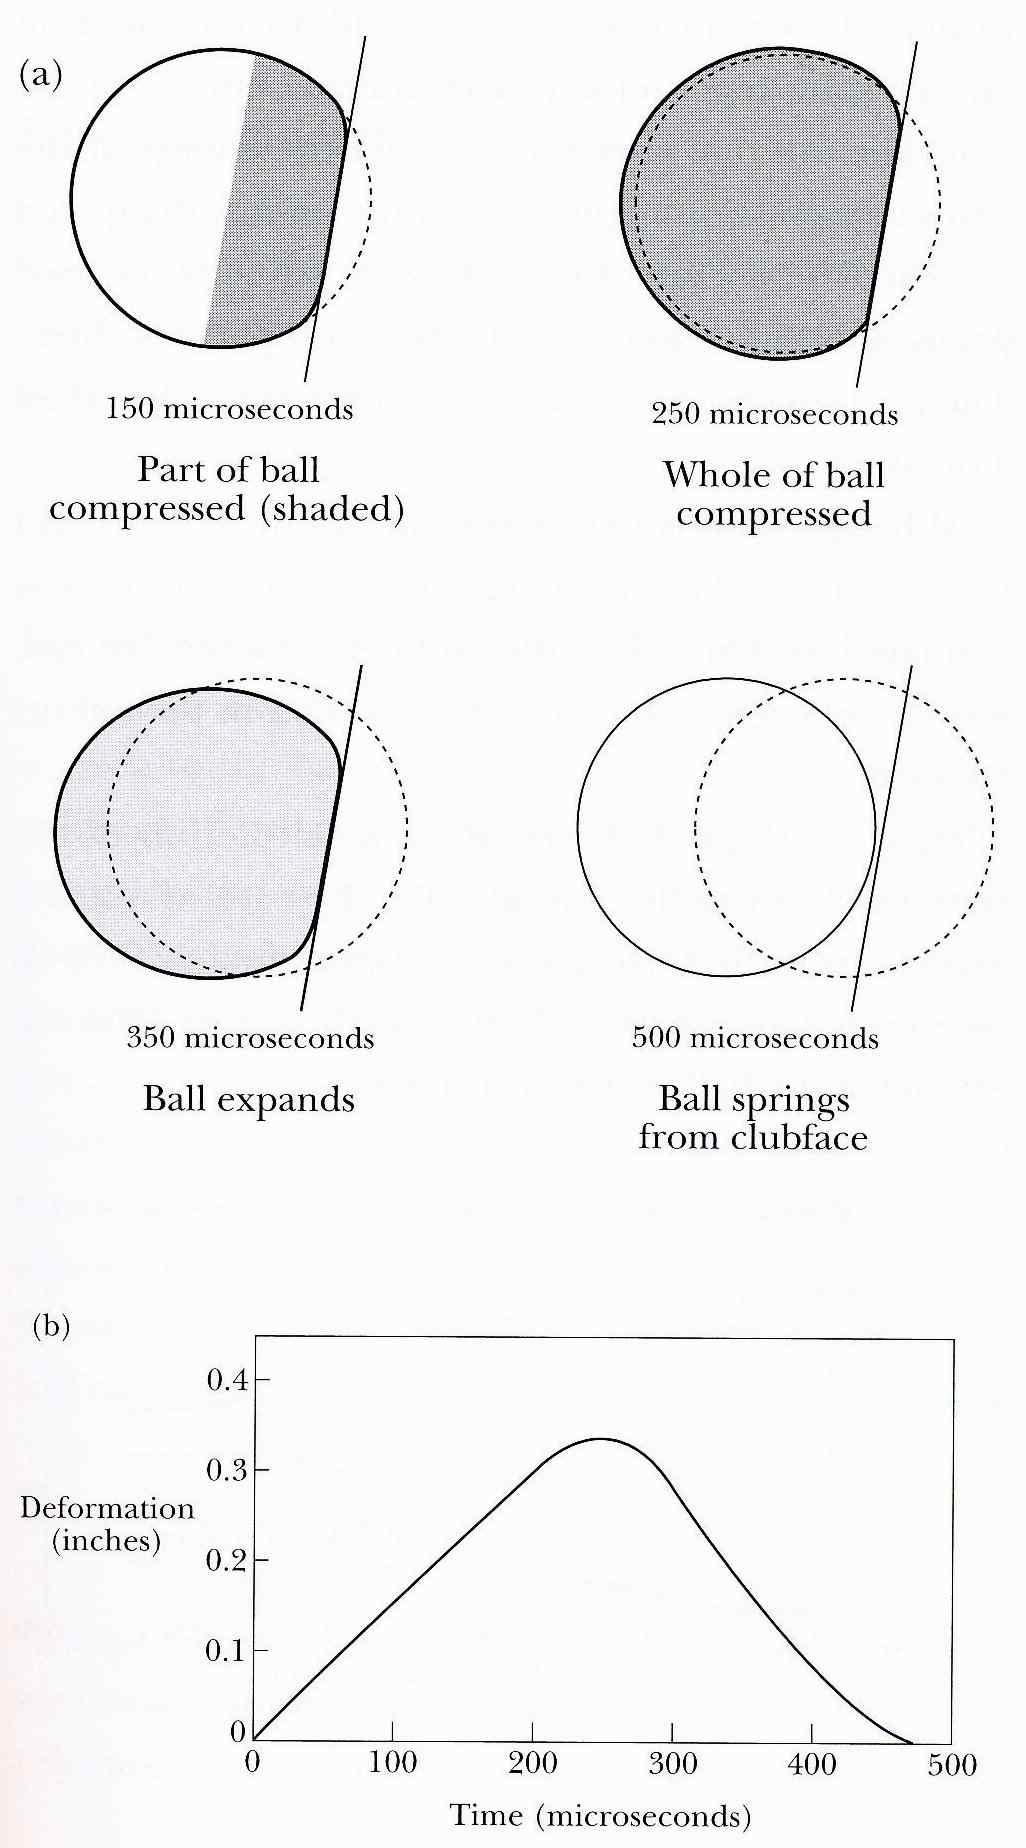 (a) 골프볼의 압축(Compression)과 팽창(Expansion)을 보여주고 (b) 골 프볼을 임팩트하는 동안 시간에 따른 골프볼의 변형 (Deformation)을 보여준다. 골 프볼은 이 순간 압축과 팽창을 번갈아 가면서 진동을 한다. 이 과정이나 골프볼이 헤드를 떠나는 순간에 골프볼의 백스핀을 측정하면 골프볼의 딤플에 의한 백스 핀의 효과를 제대로 된 골프볼의 백스핀을 측정할 수 없다.